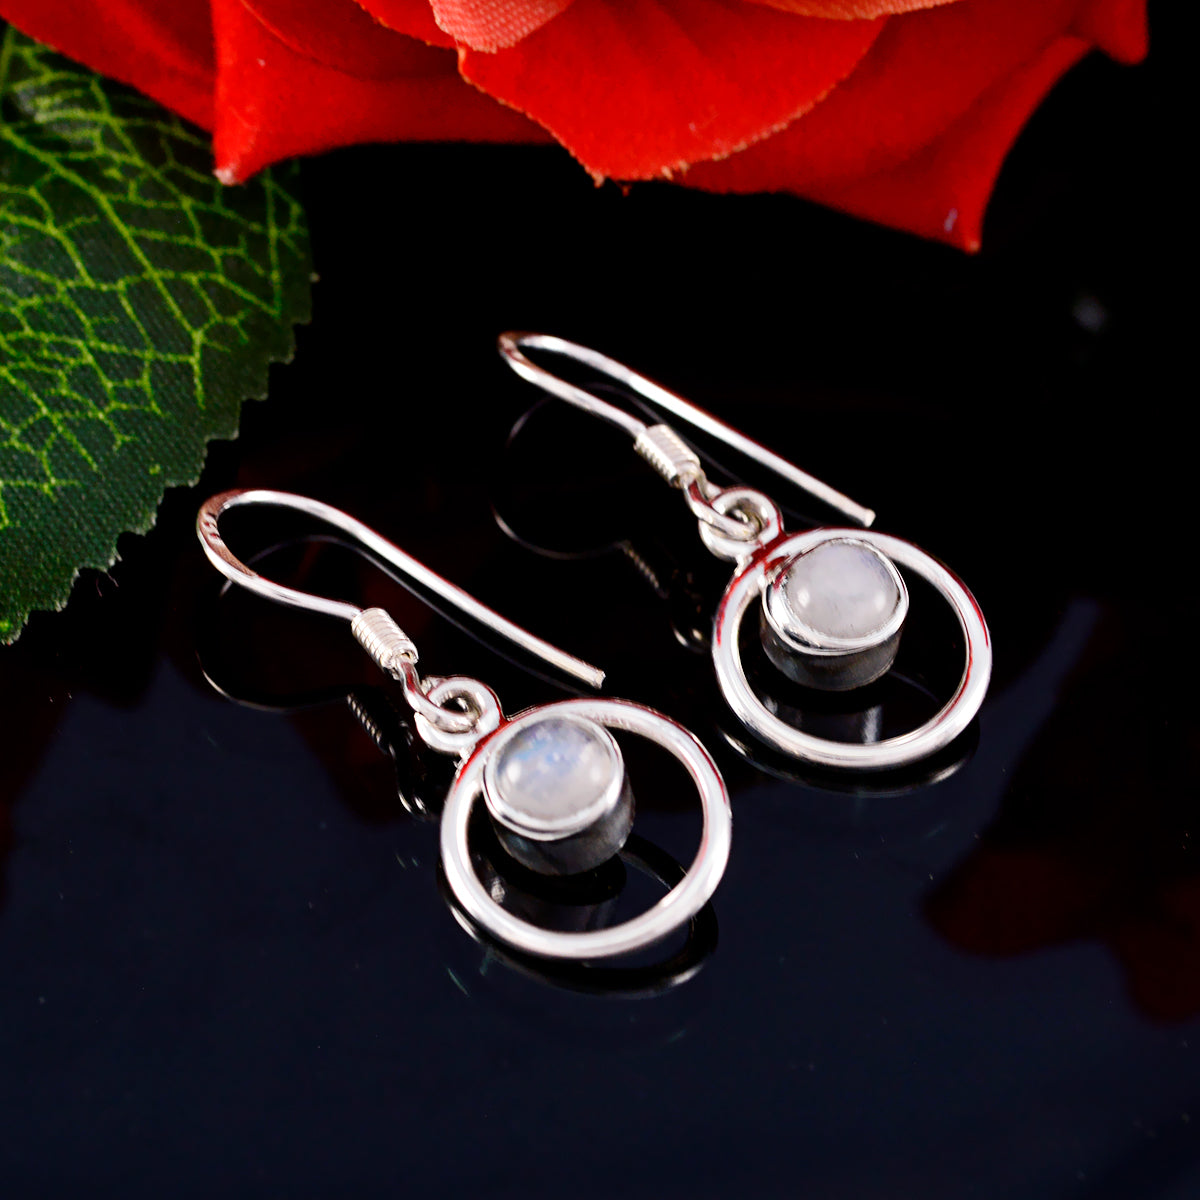 Riyo Nice Gemstone round Cabochon White Rainbow Moonstone Silver Earring handmade gift